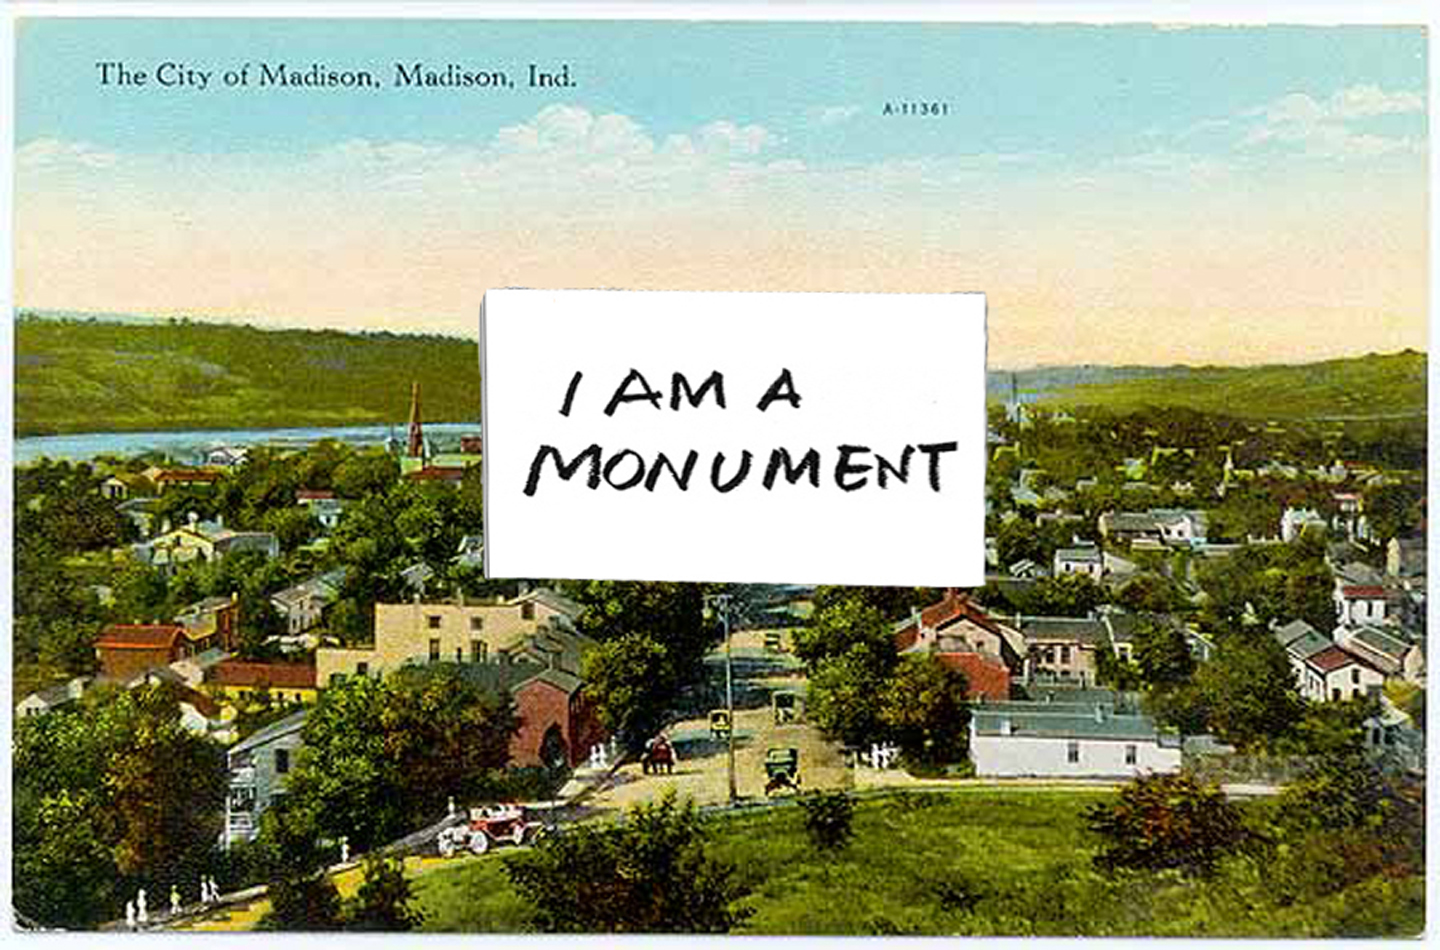 Indiana-Madison-front-copy.jpg